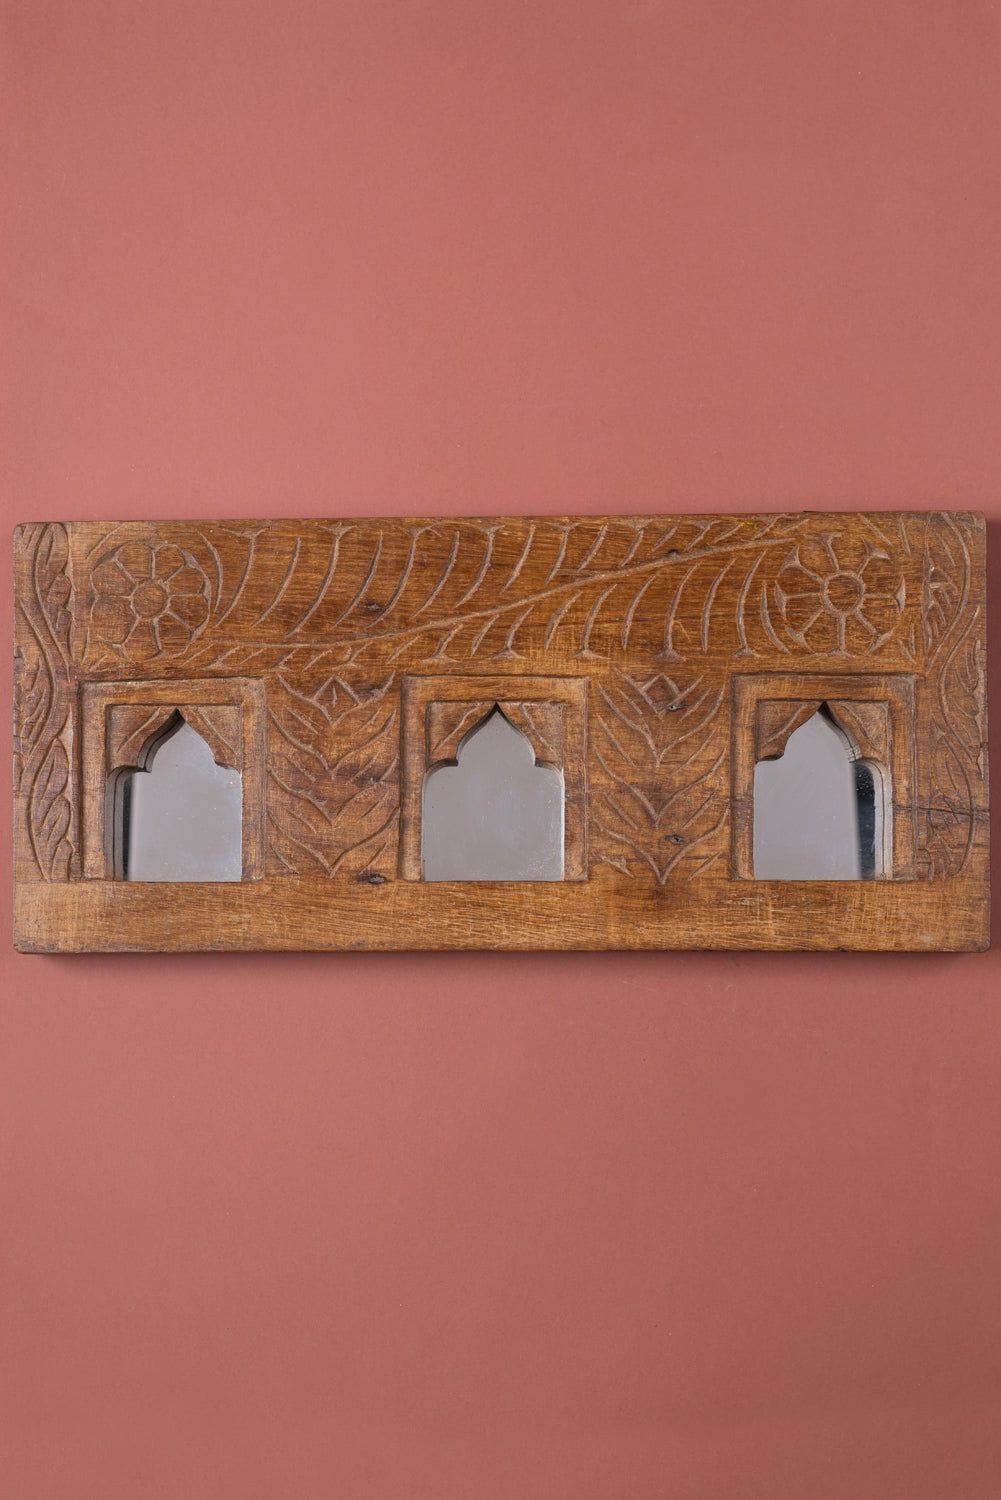 Ian Snow Ltd Vintage Wooden Triple Arch Frame - 10